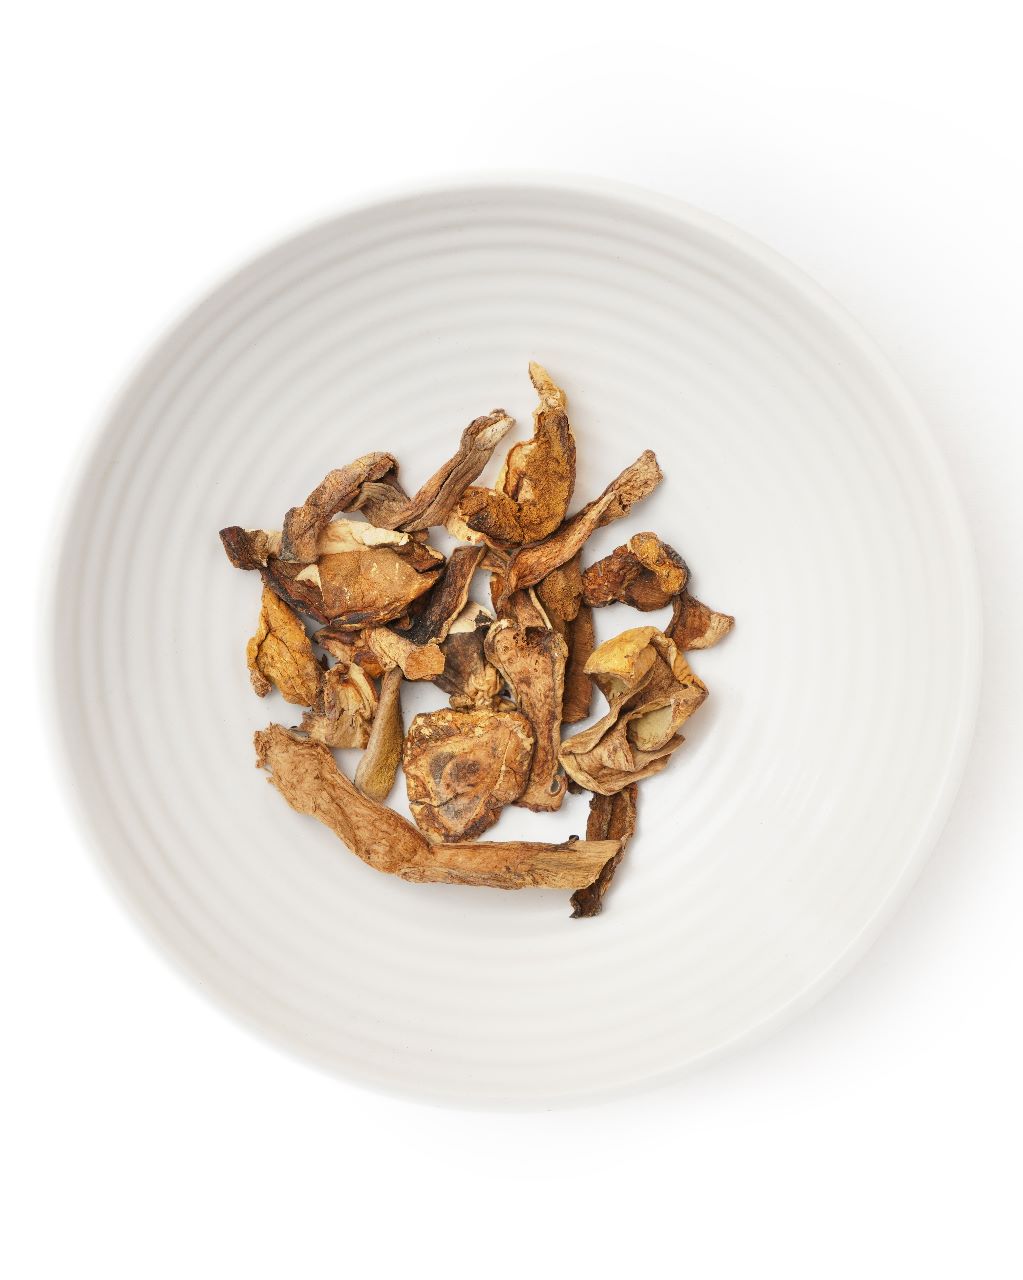 Dry Porcini Mushrooms (Sliced)